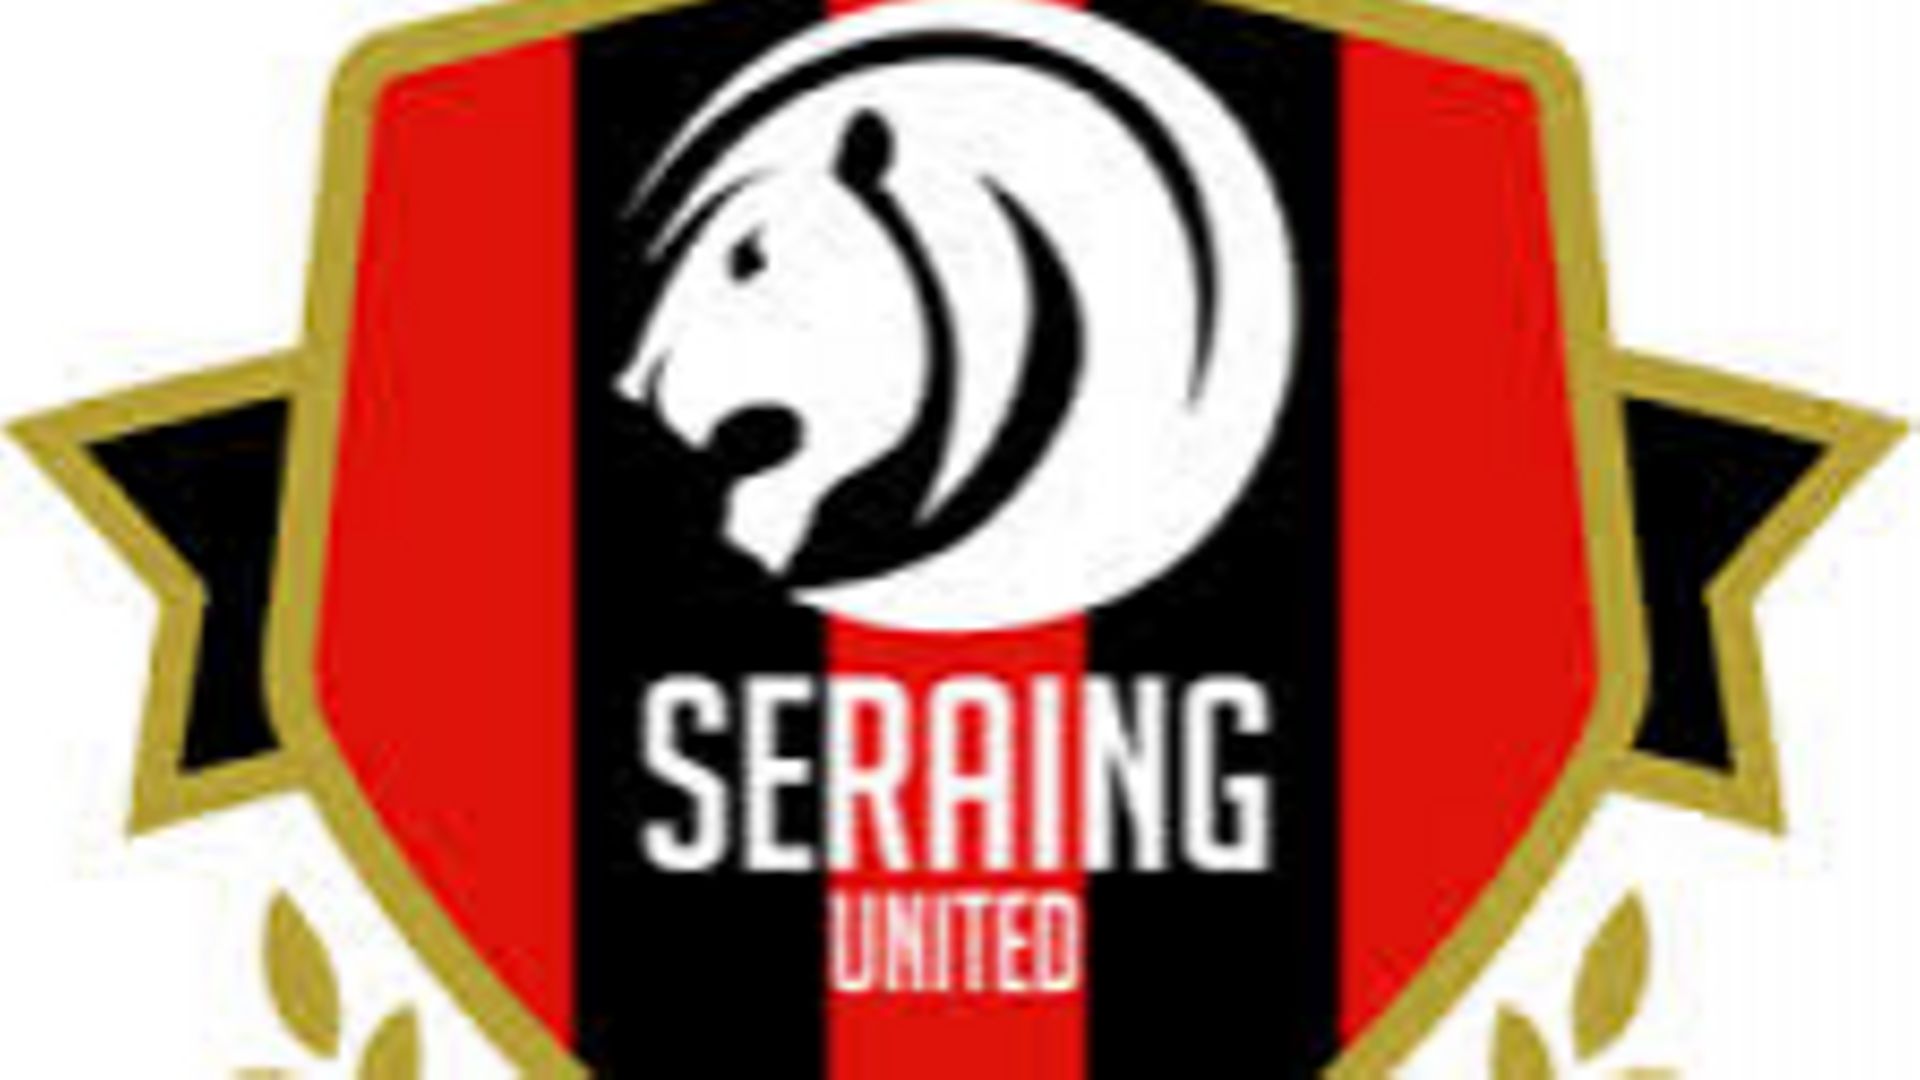 Logo Seraing United